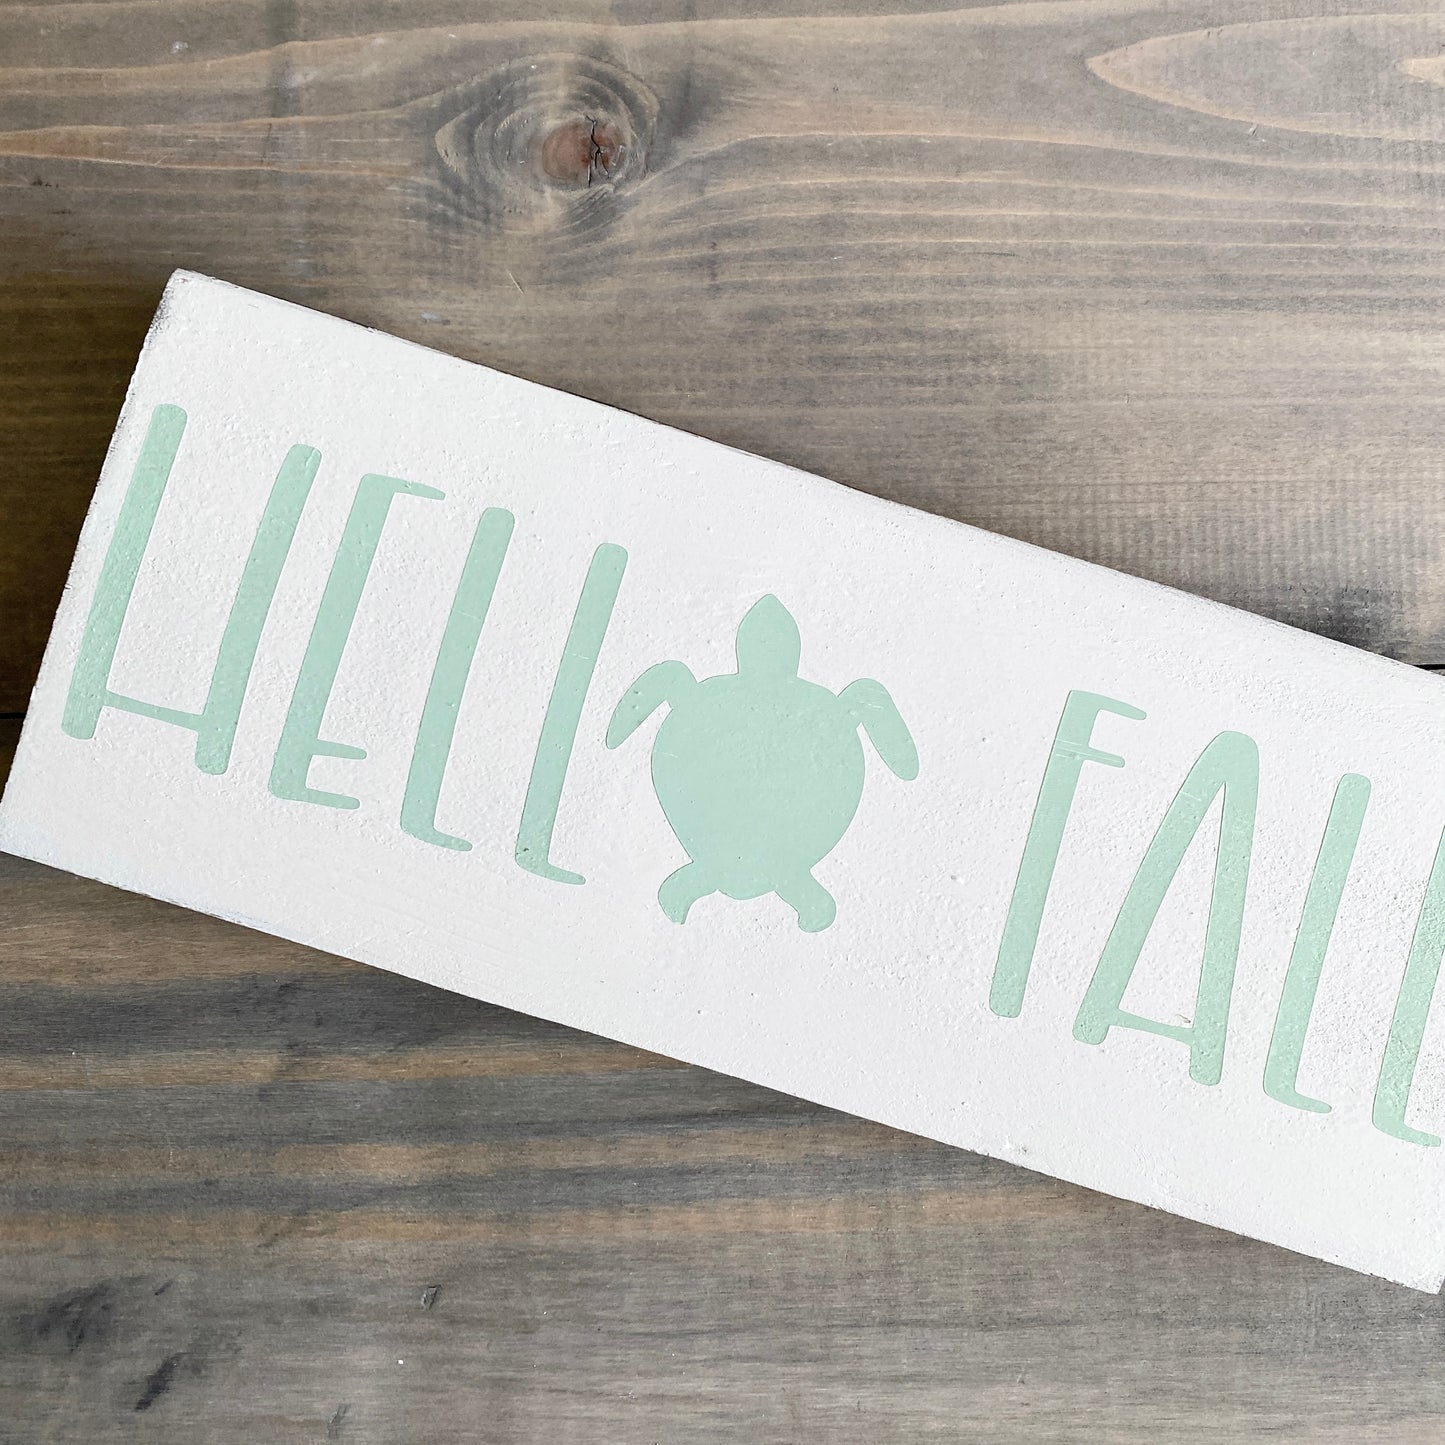 Hello Fall Sea Turtle Sign